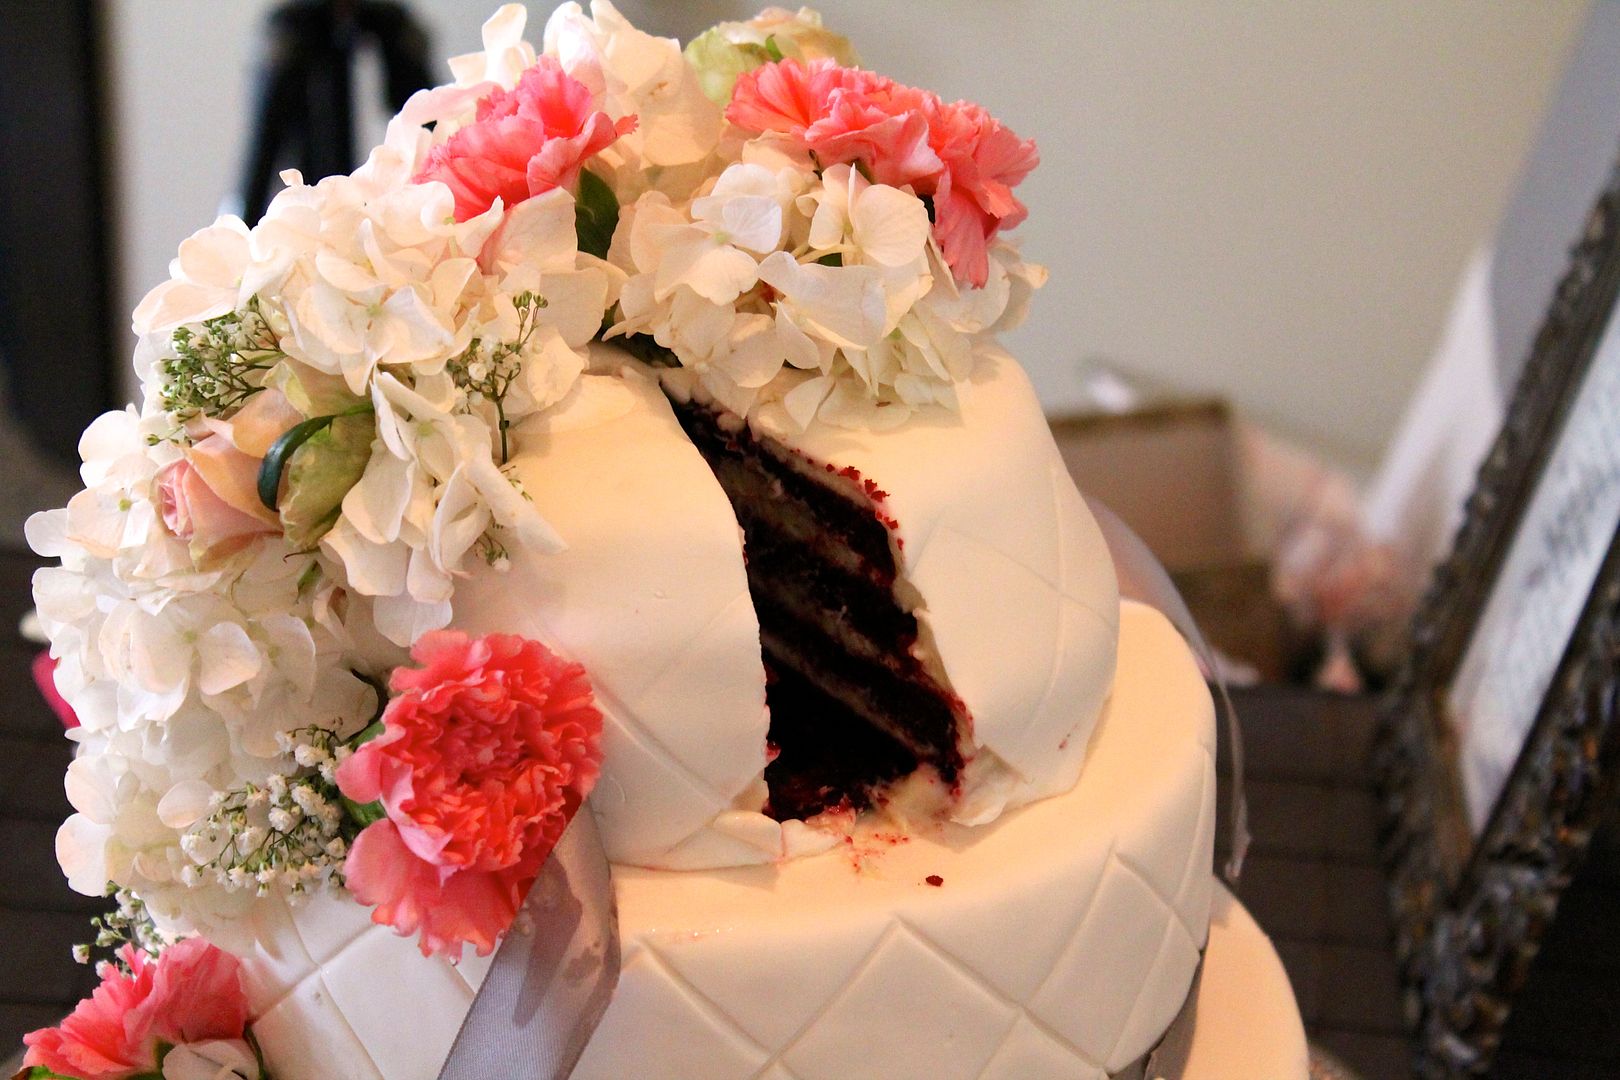 Wedding cake, cut | Korena in the Kitchen